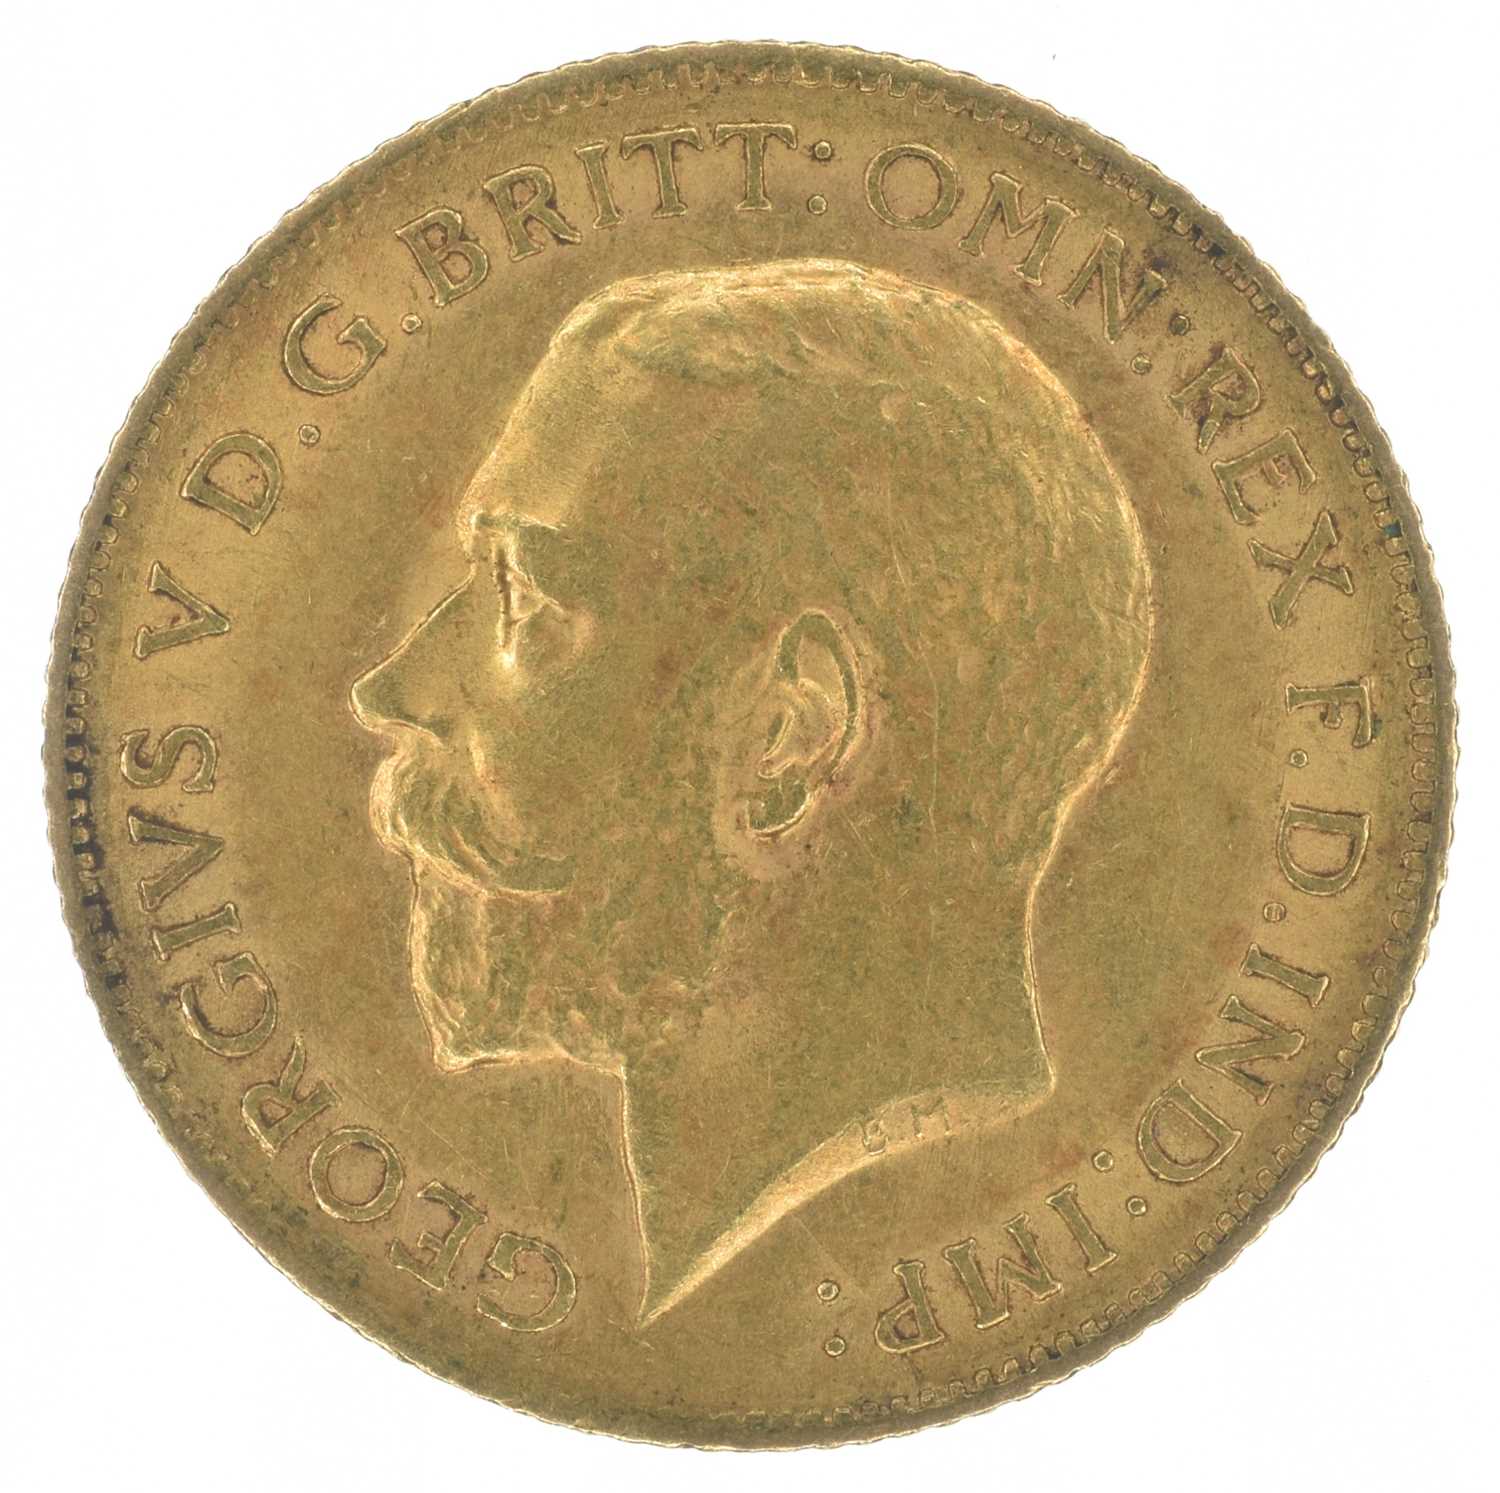 Lot 76 - King George V, Half-Sovereign, 1911, London Mint.